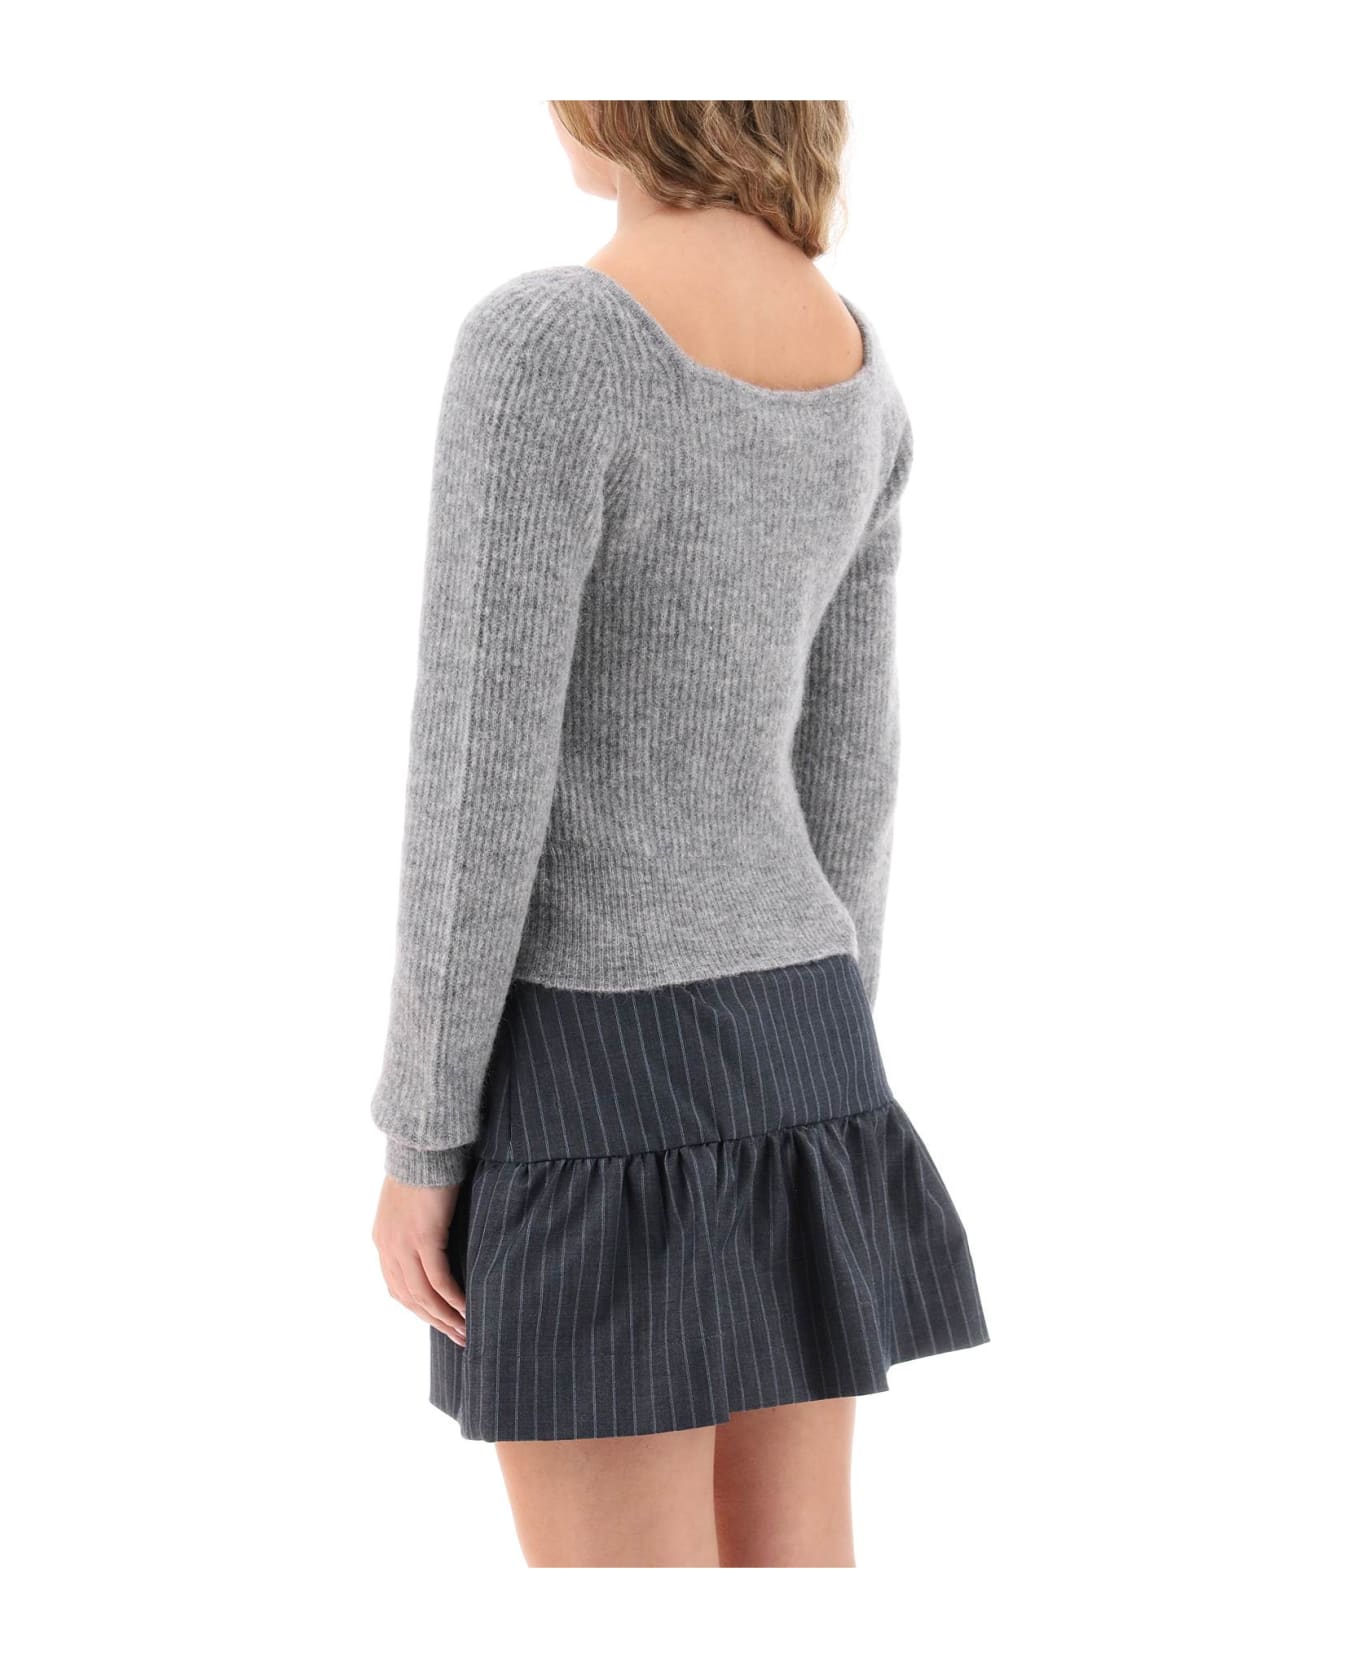 Ganni Grey Merino Blend Sweater - PALOMA MELANGE (Grey) ニットウェア